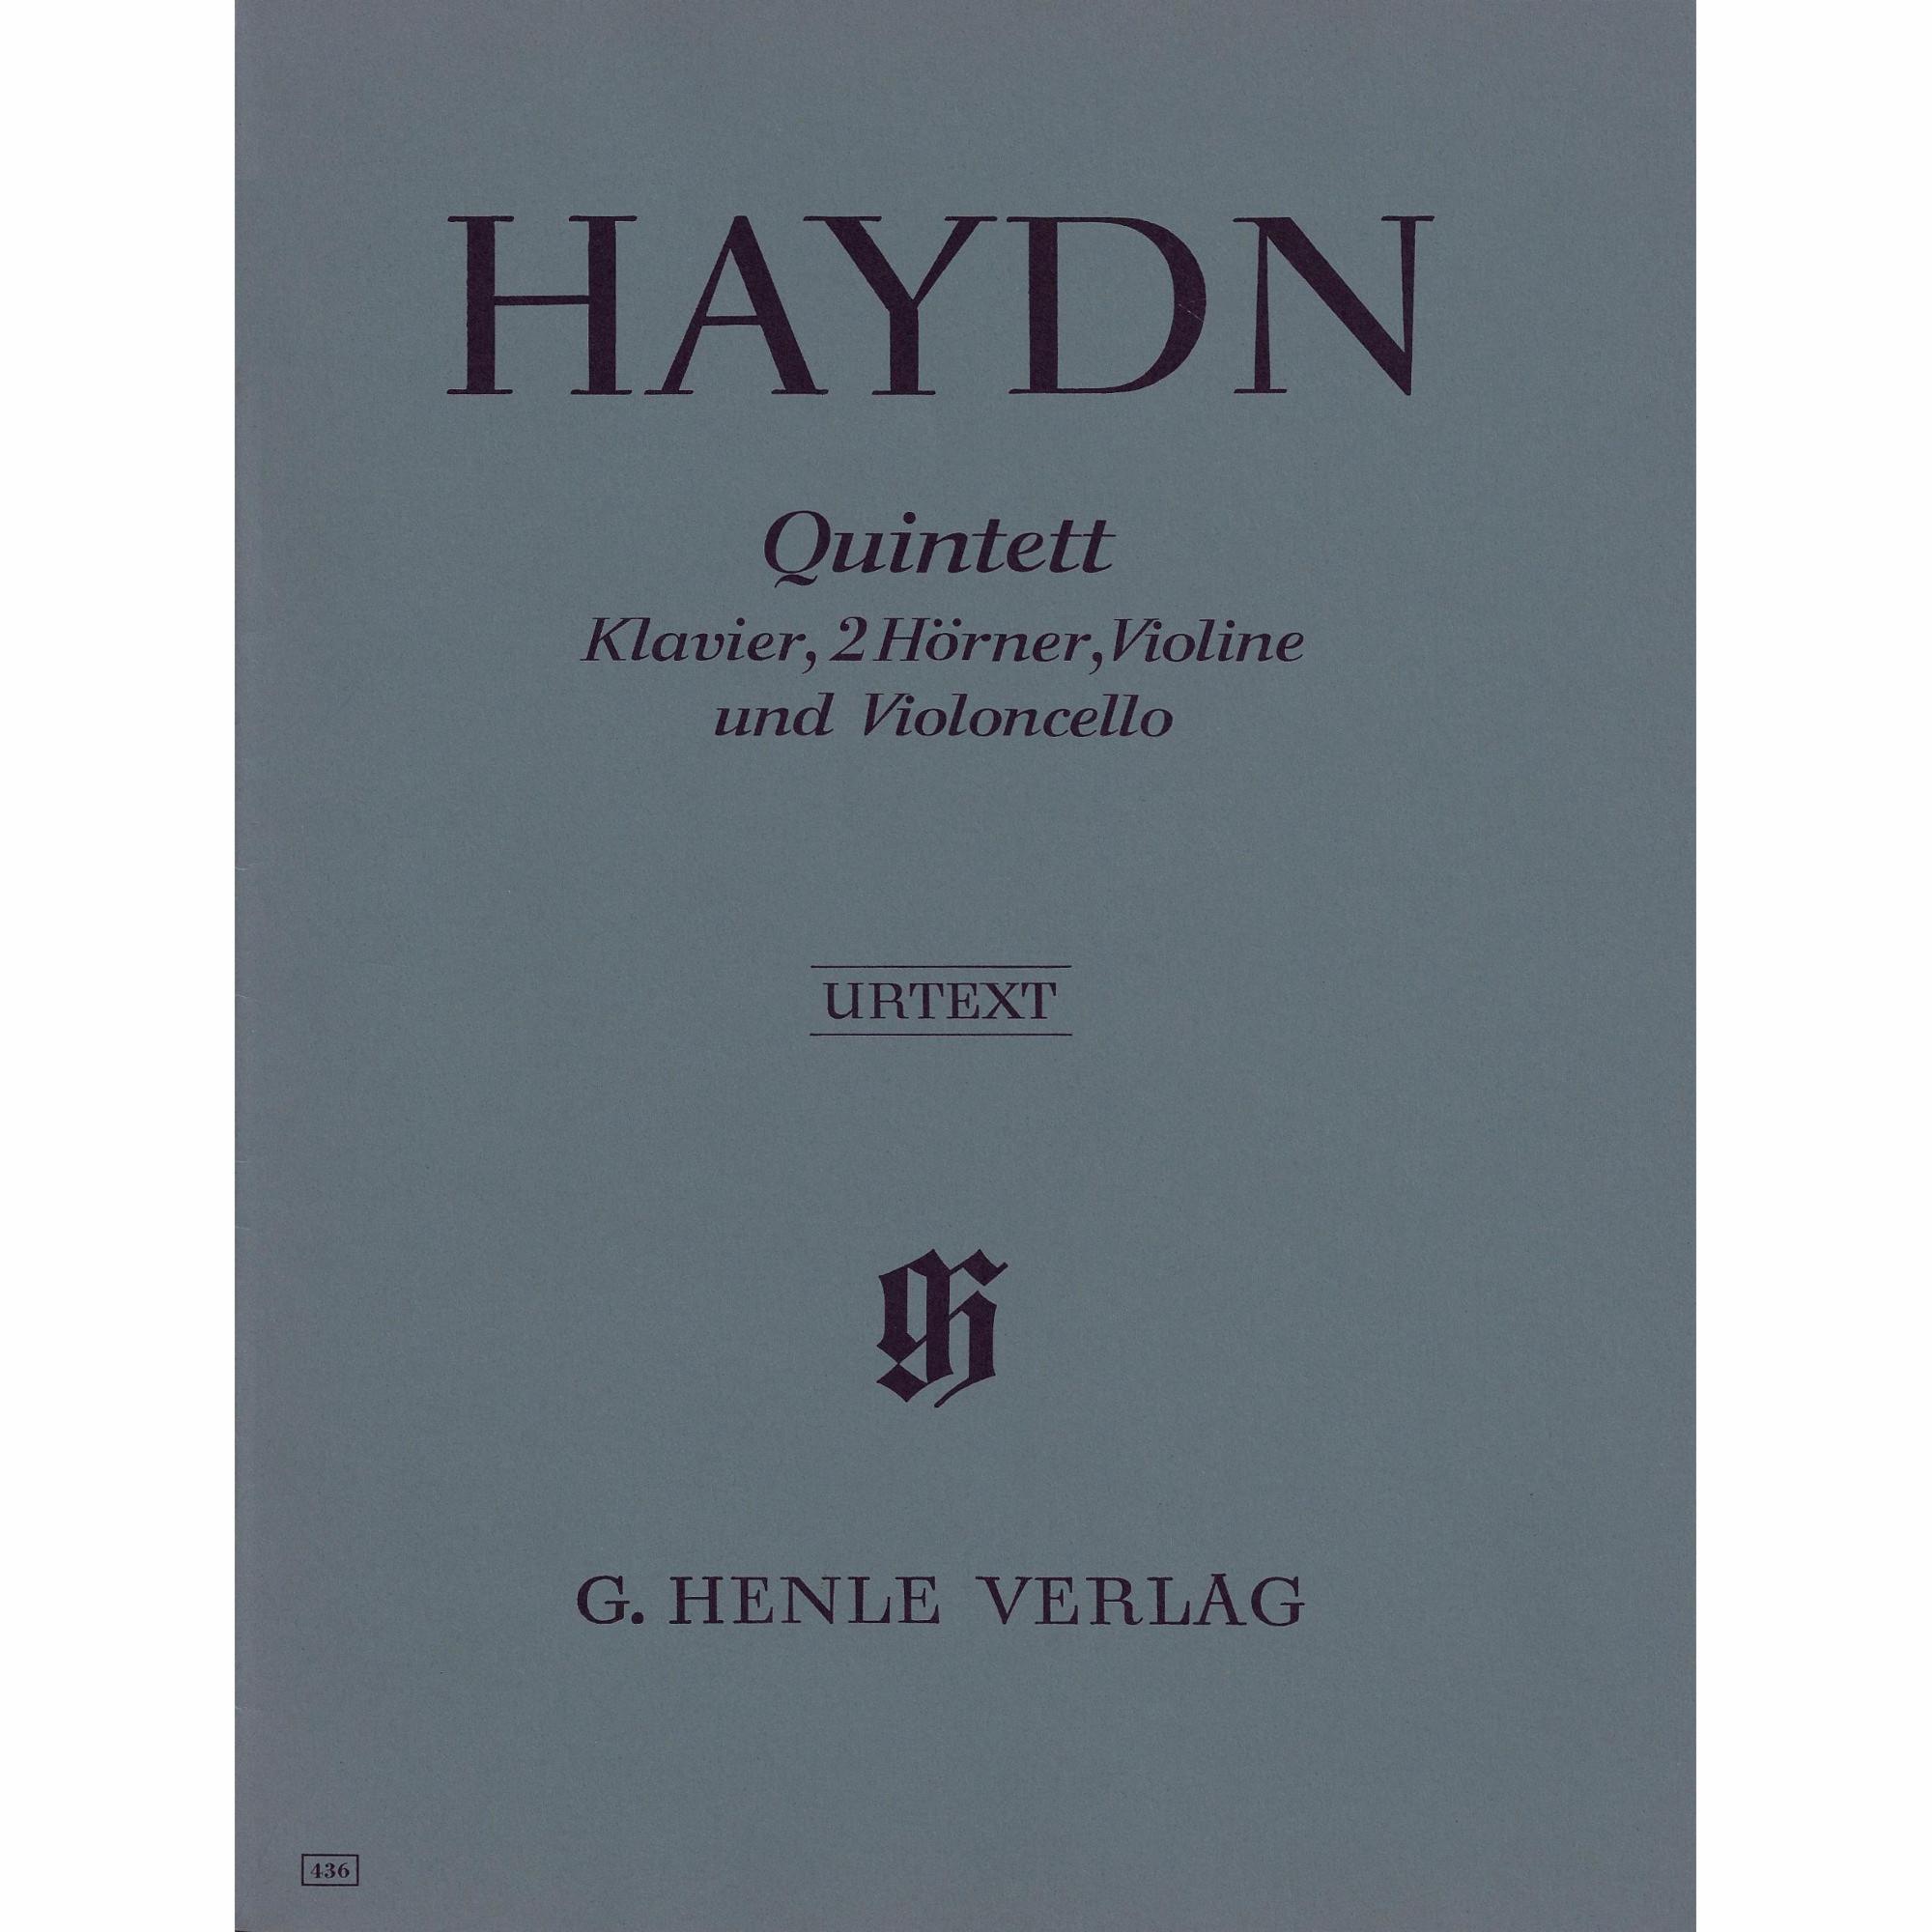 Haydn -- Quintet in E-flat, Hob. XIV:1 for Mixed Quintet